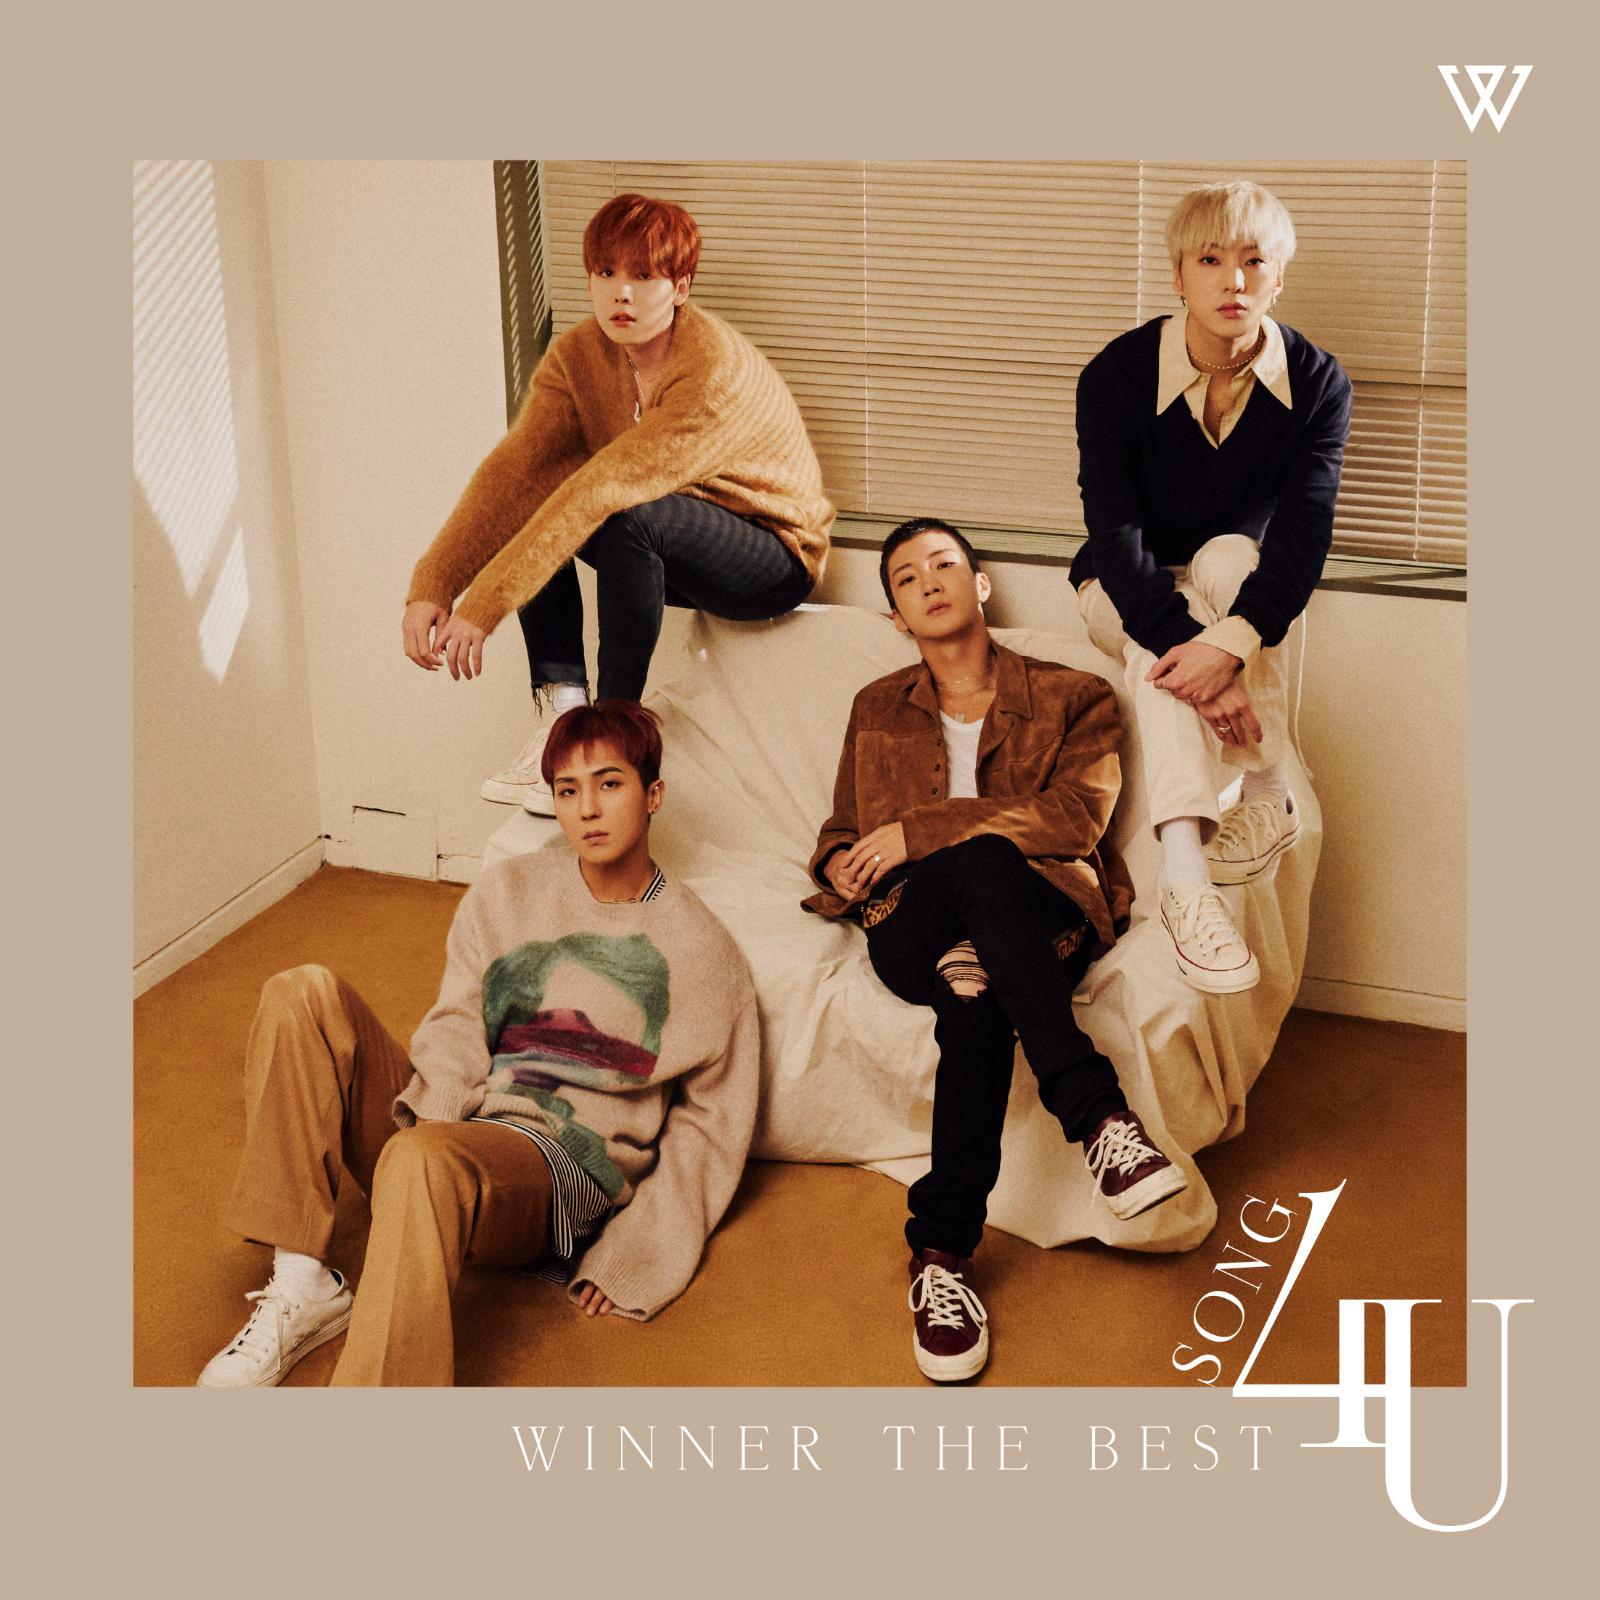 WINNER THE BEST "SONG 4 U" WINNER 专辑 网易云音乐